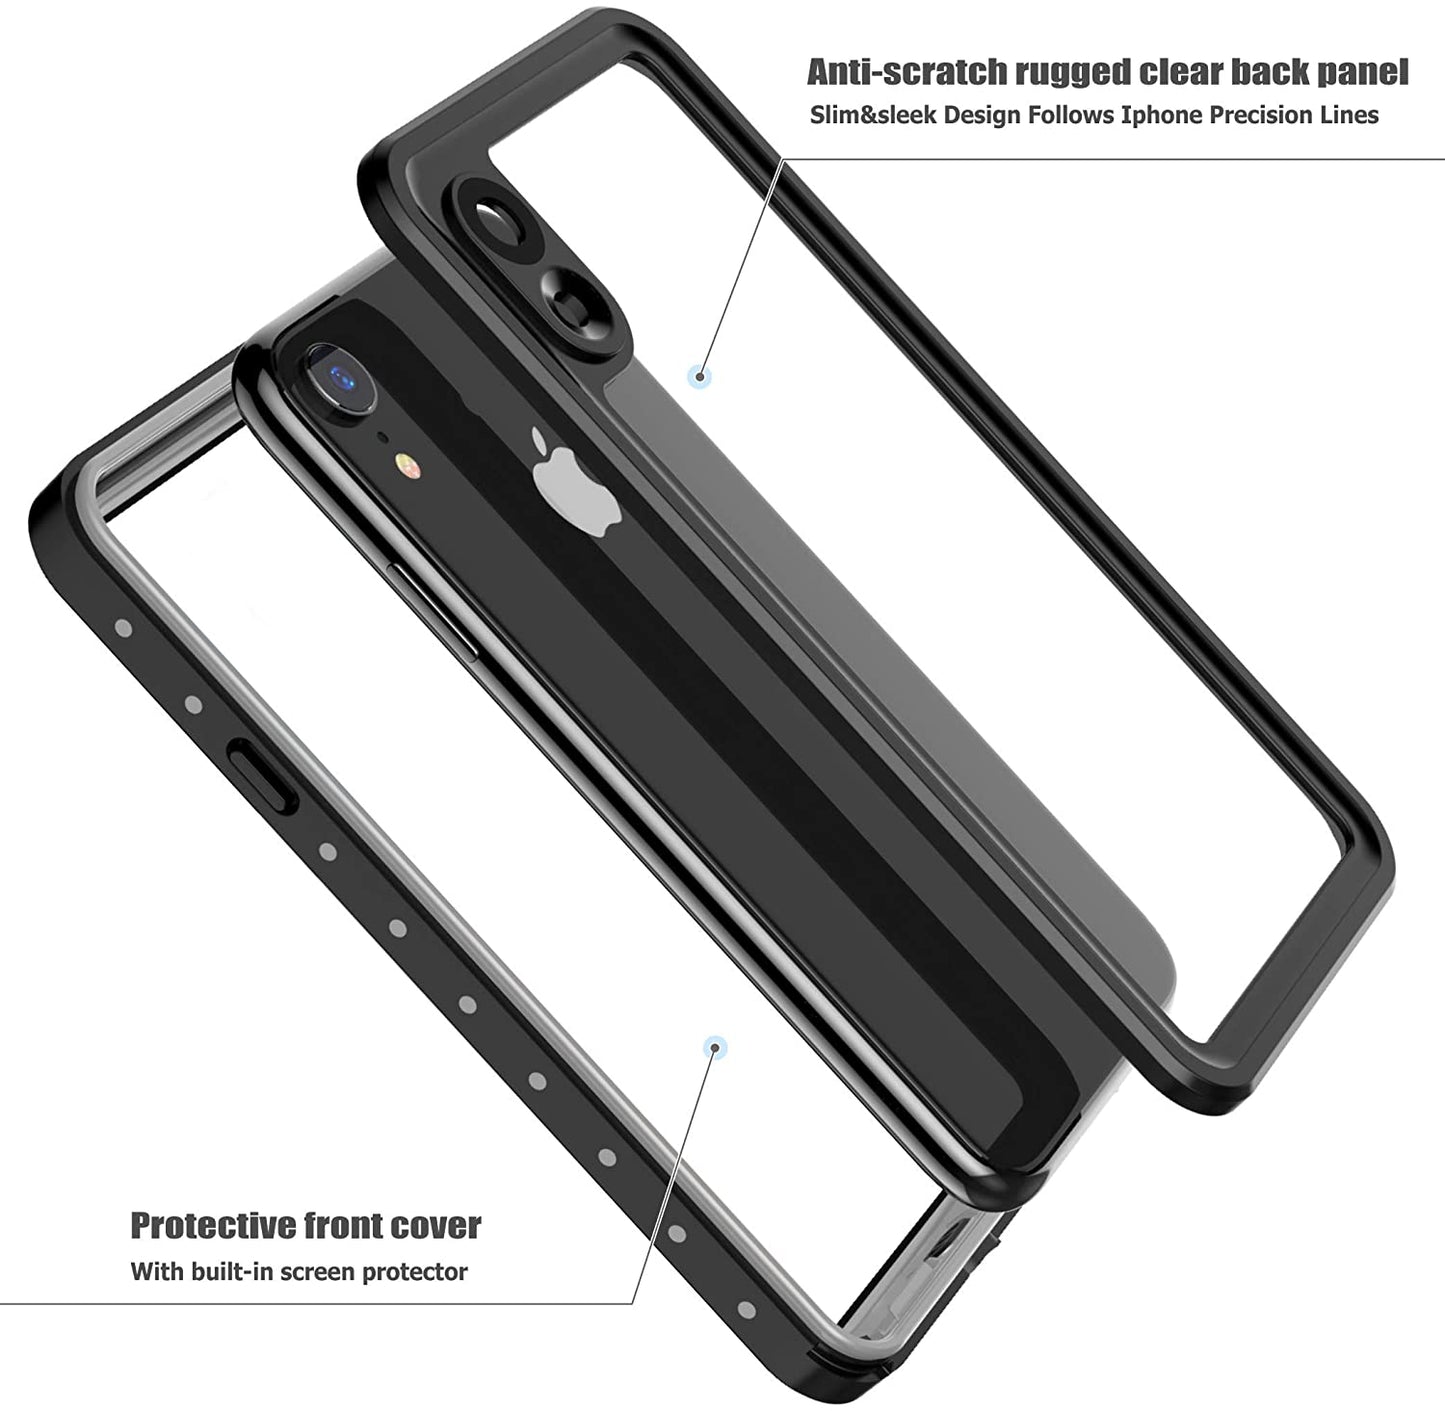 OAKTREE ShockProof WaterProof Full-Body Rugged Case for iPhone XR - Black/Clear Back